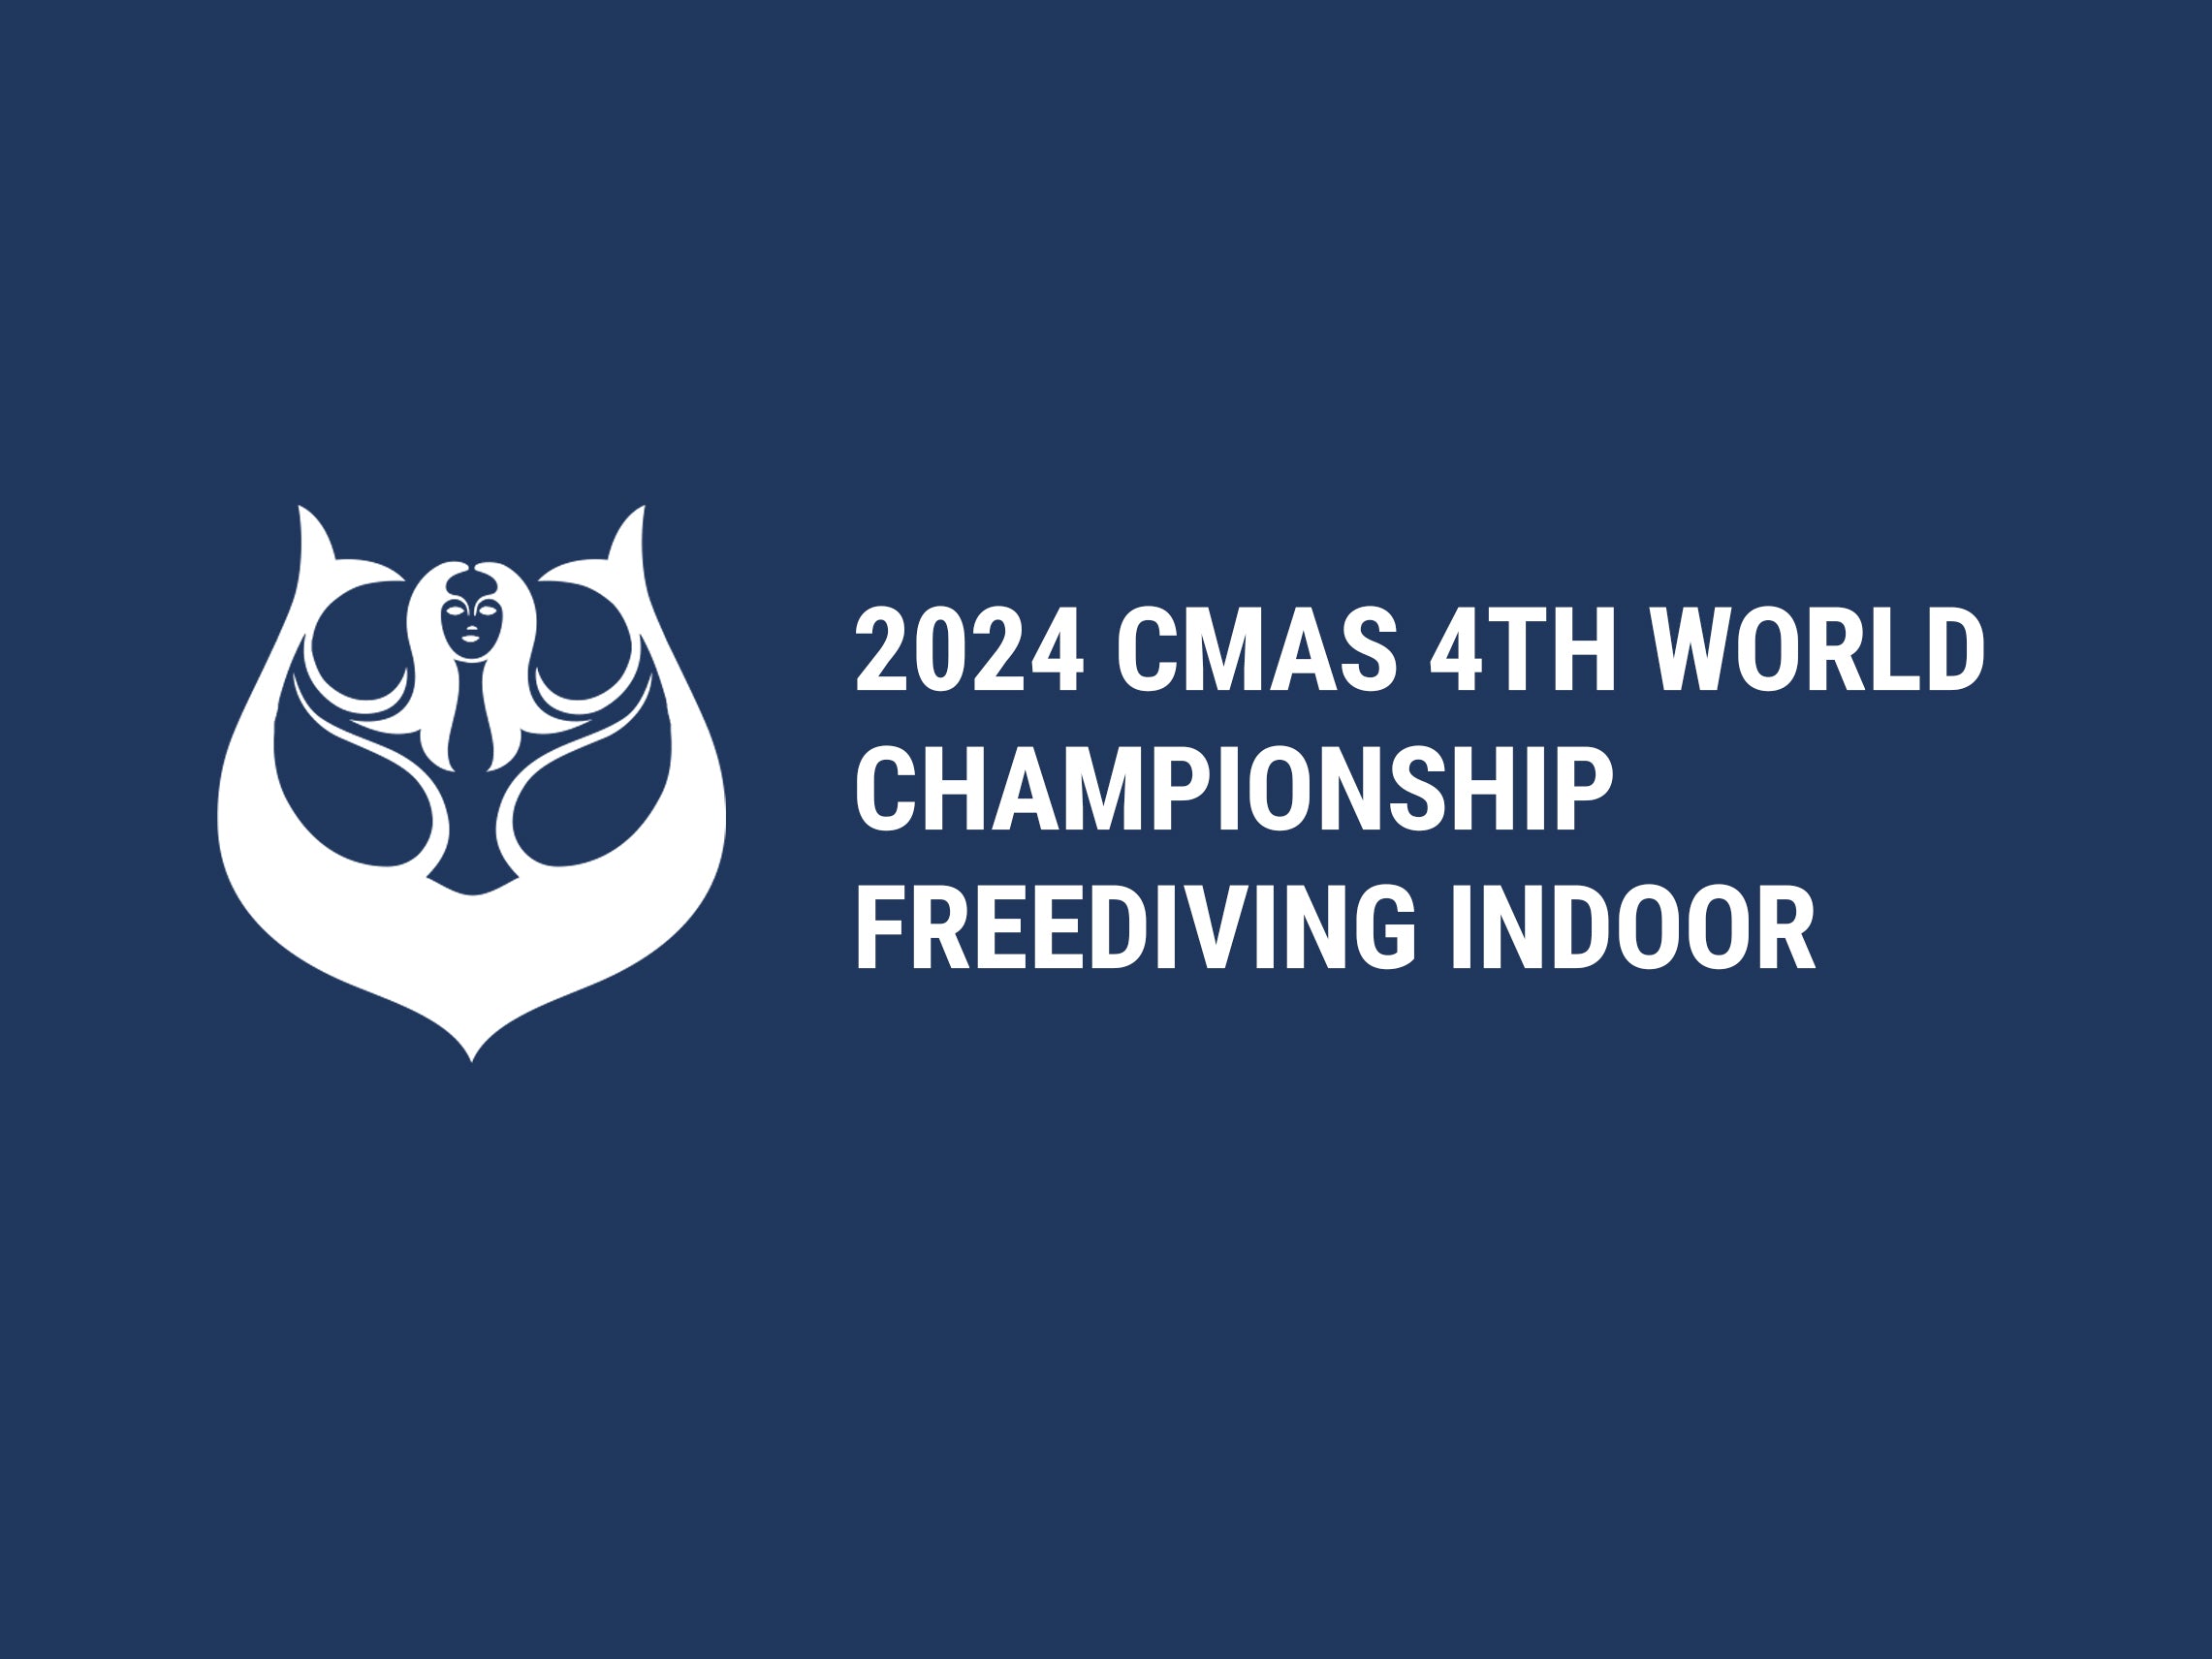 CMAS 4th World Championship Freediving Indoor